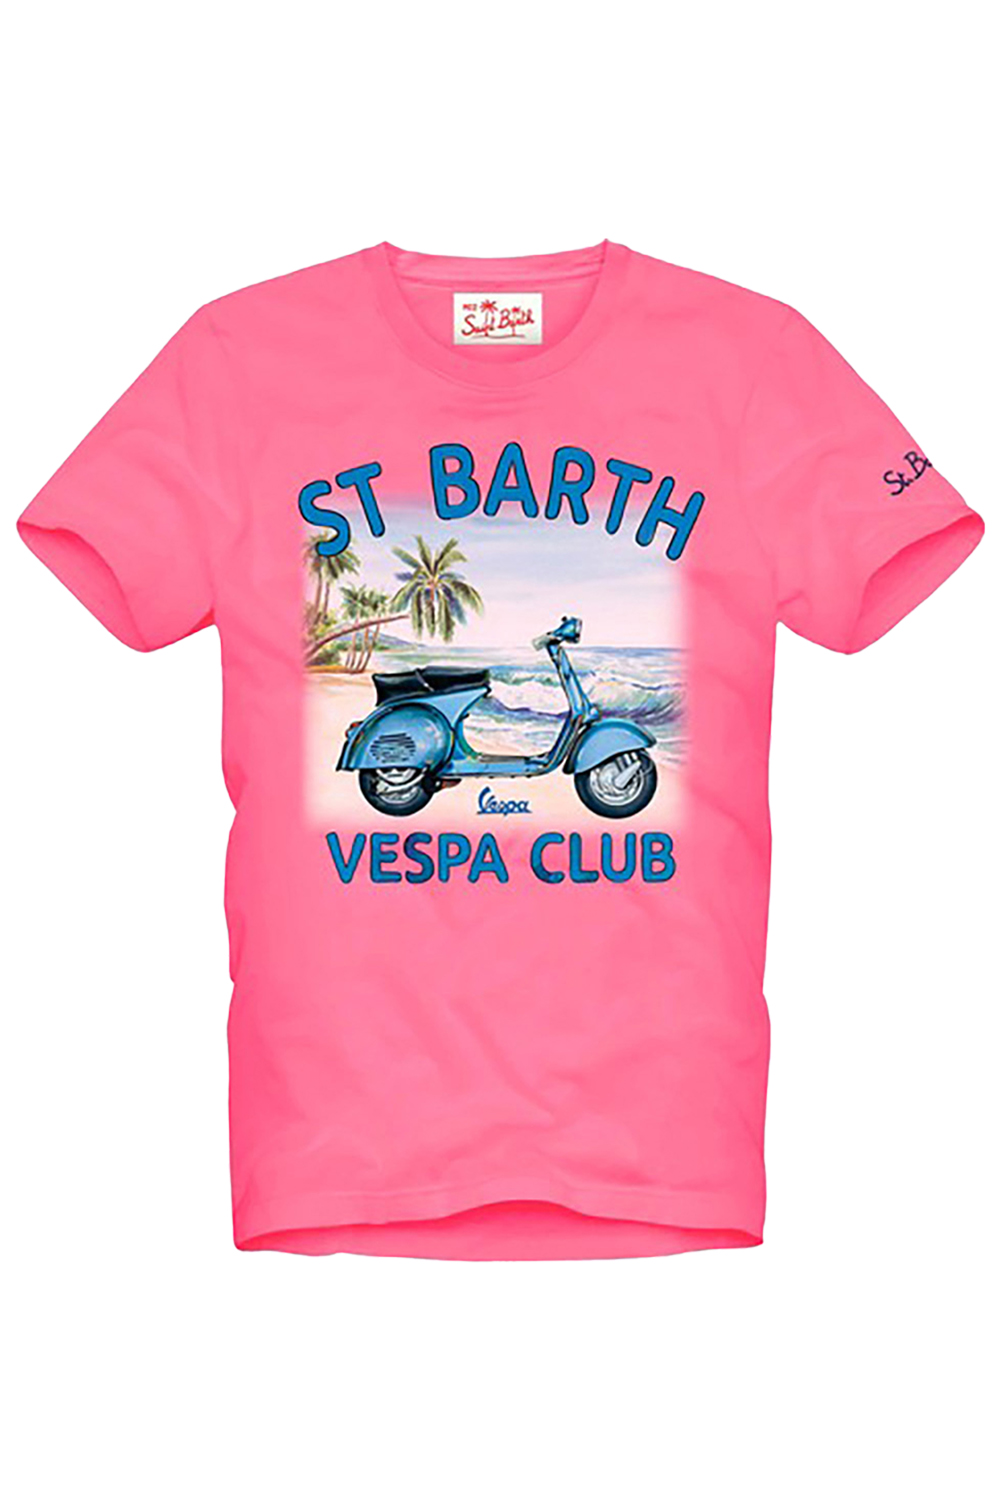 Camiseta SB Vespa Club